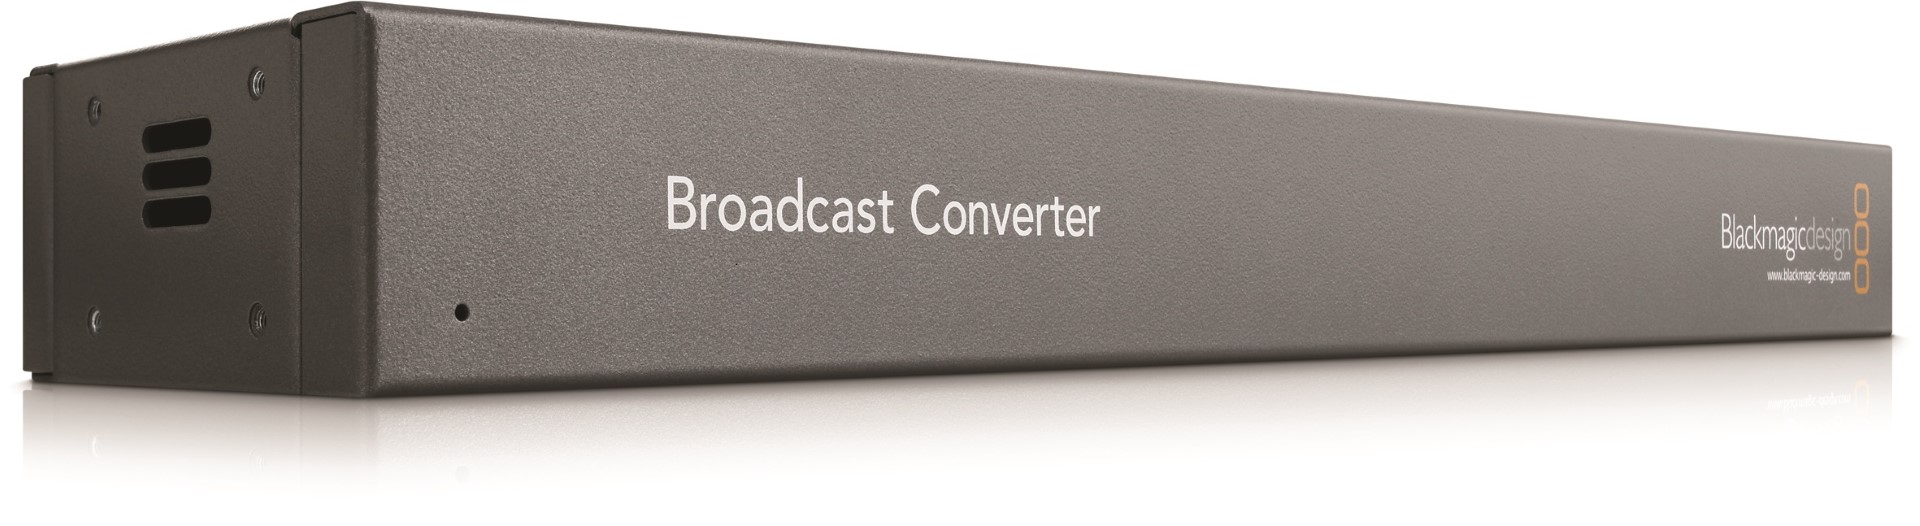 Broadcast Converter конвертер Blackmagic